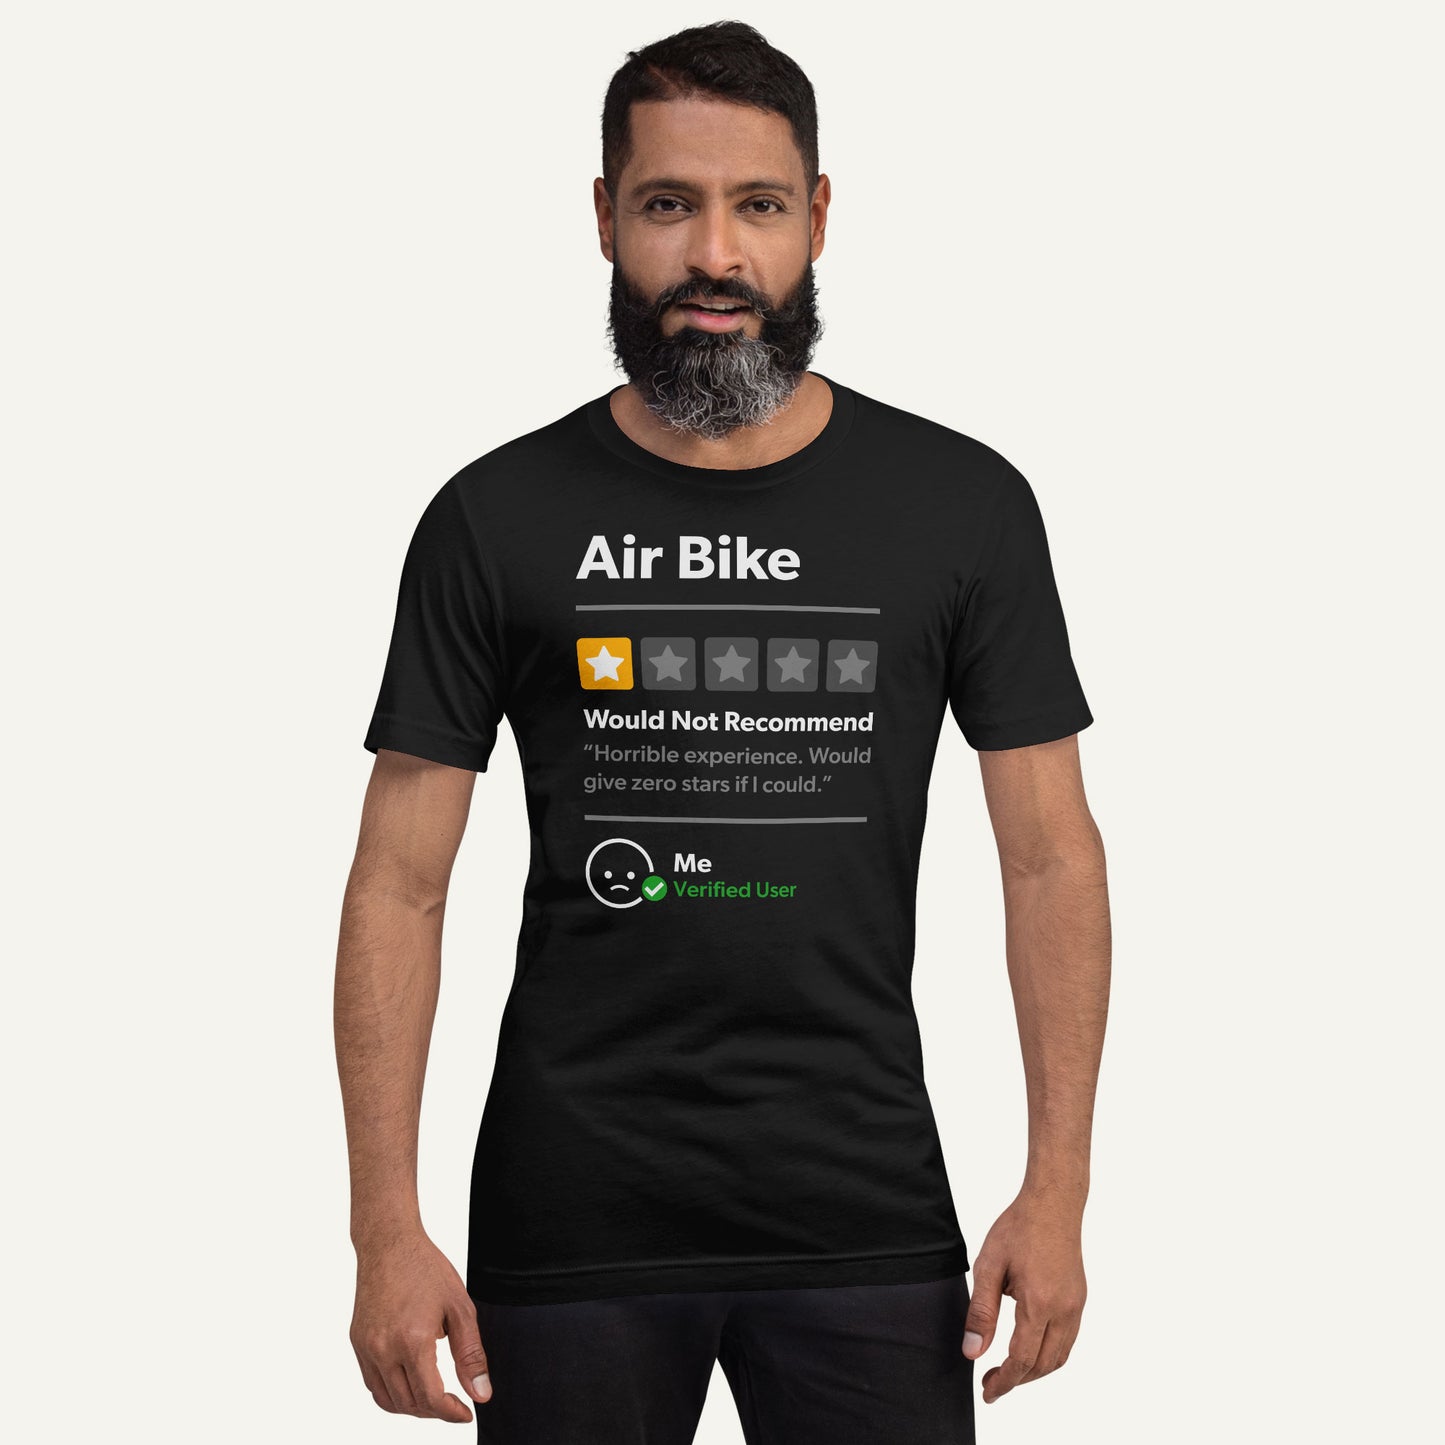 Air Bike 1 Star Would Not Recommend Men’s Standard T-Shirt